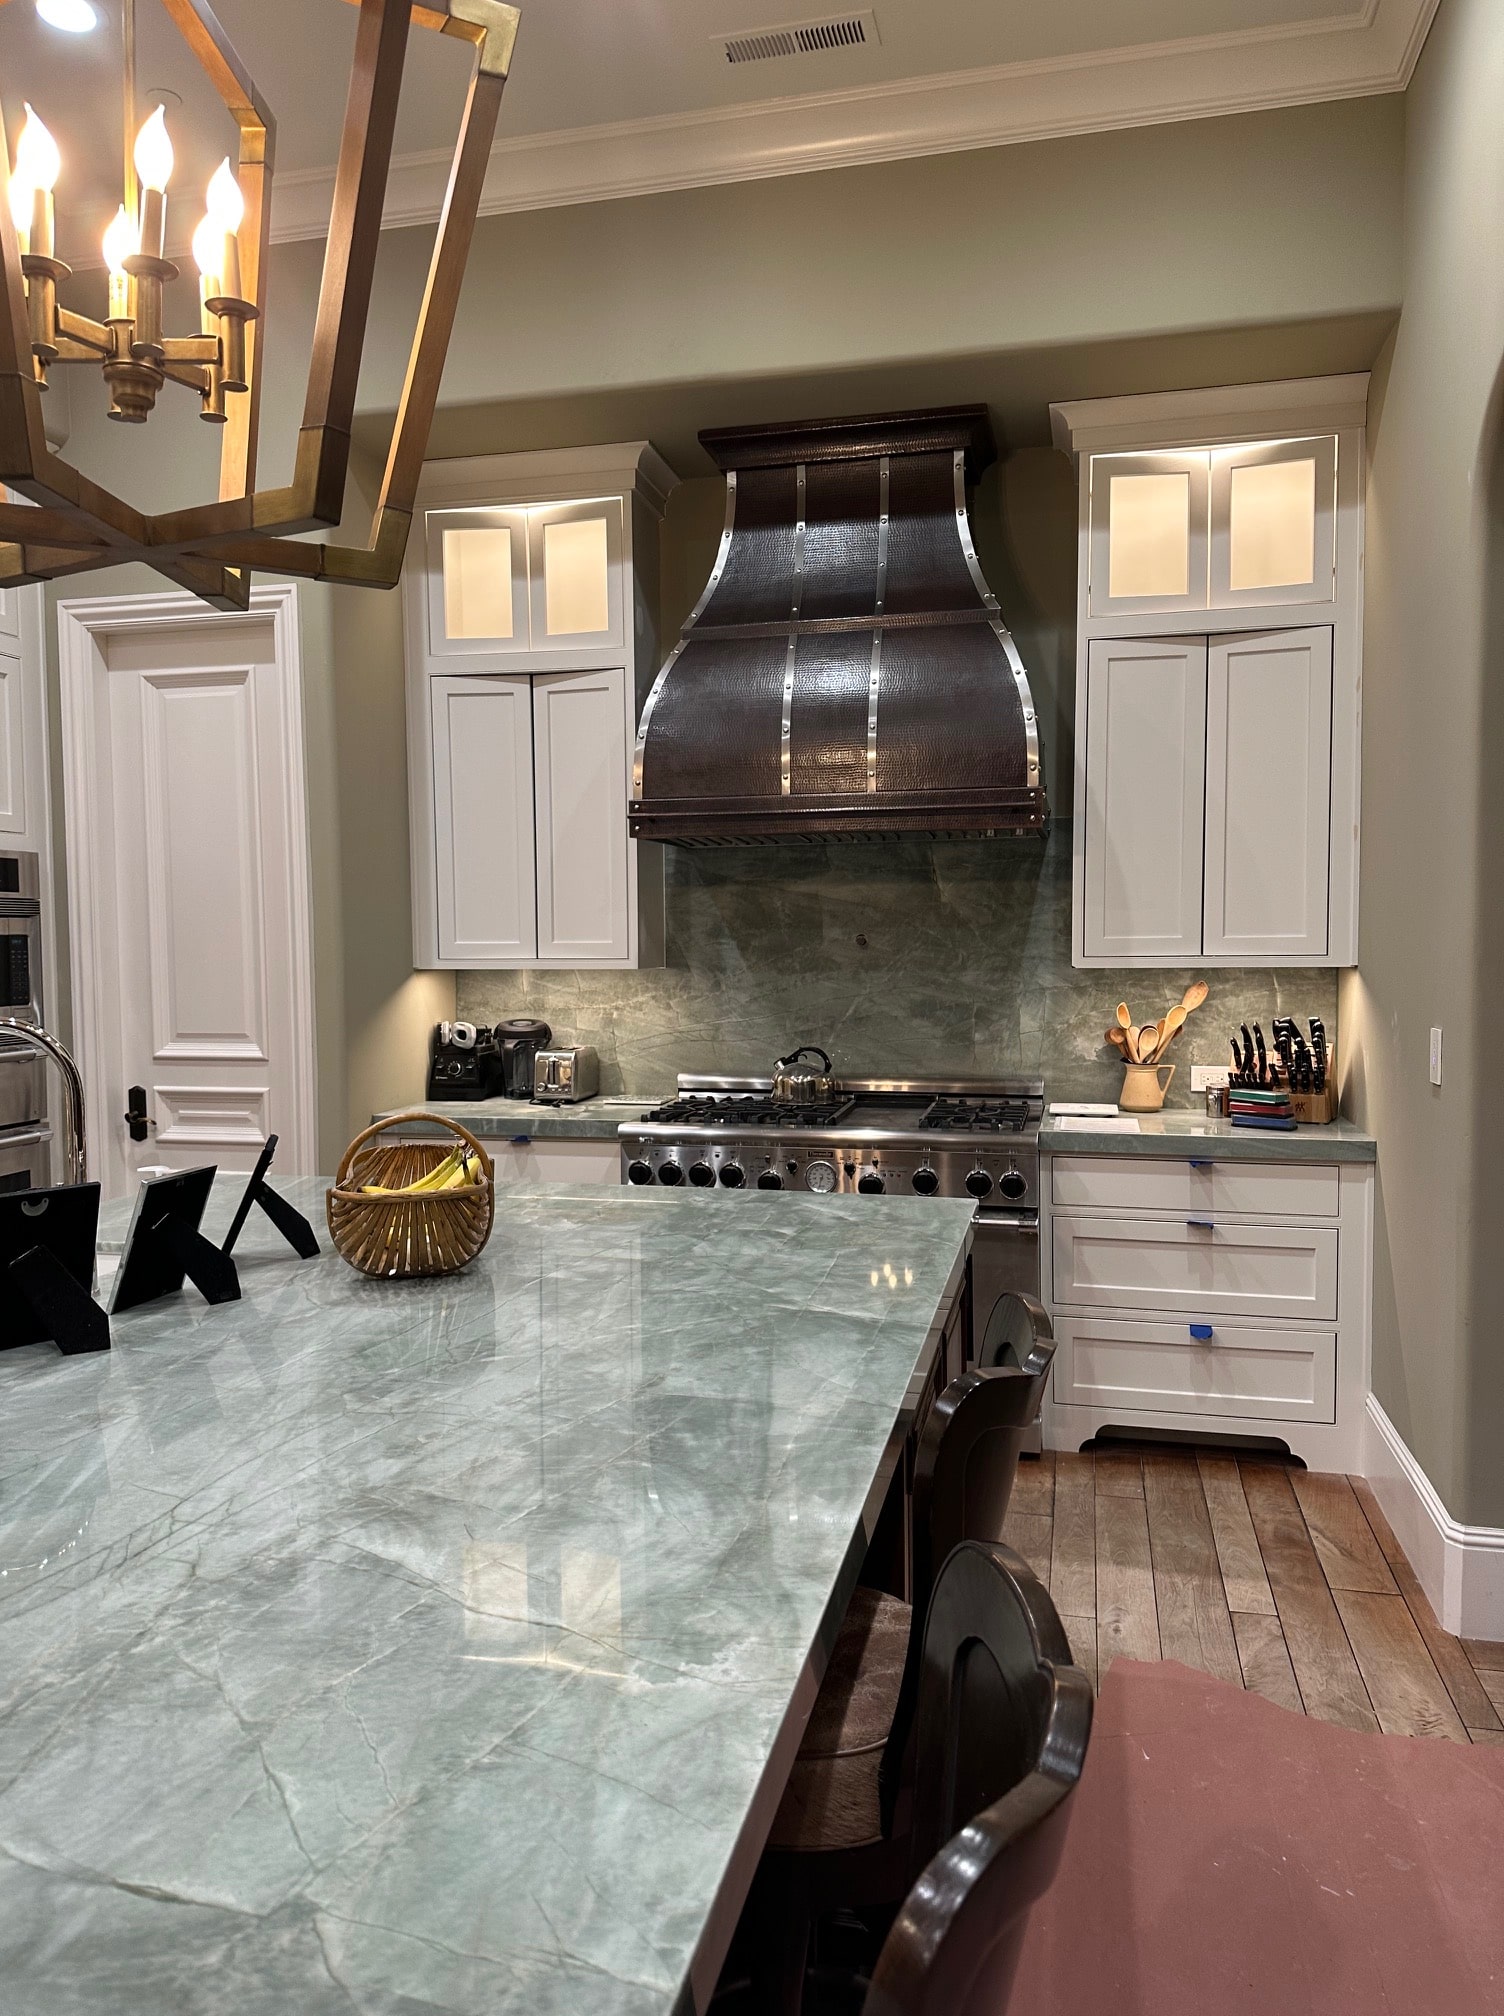 Inspiring range hood and classic kitchen planning, white kitchen cabinets with sleek grey kitchen countertops, and stunning marble backsplash